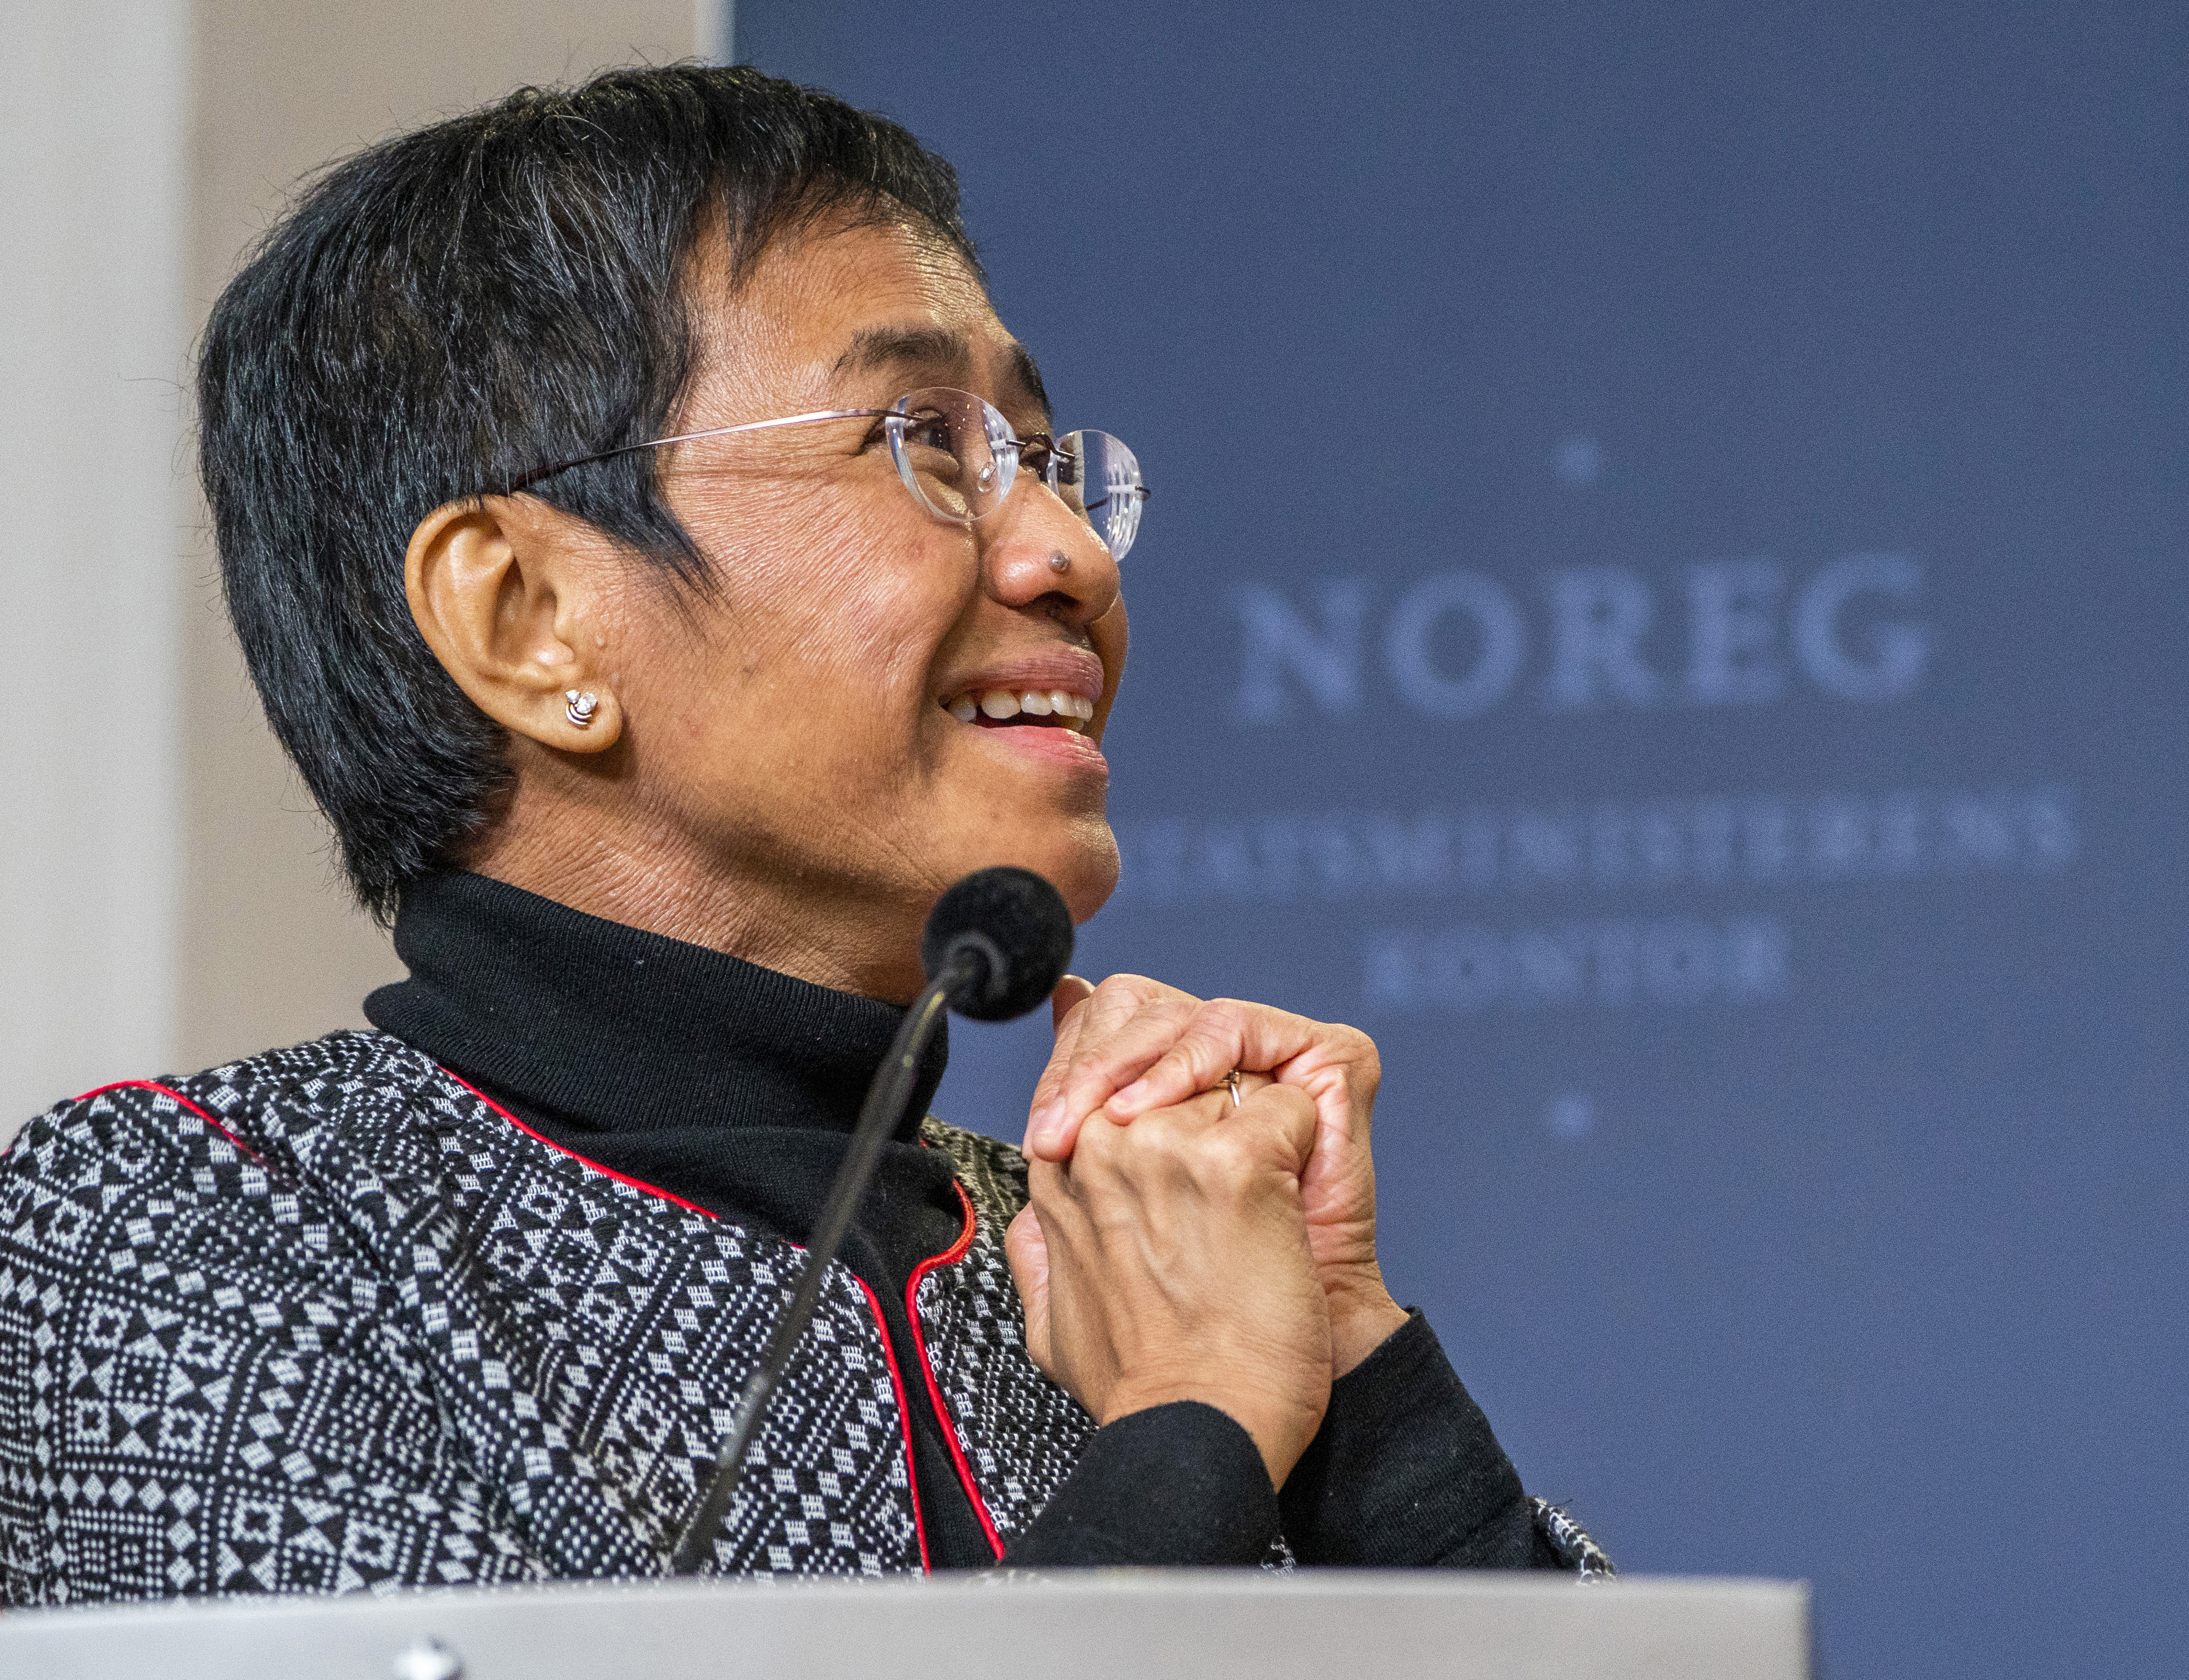 Nobel Peace Prize laureate Maria Ressa attends a news conference in Oslo, on December 11, 2021. (Hakon Mosvold Larsen/NTB scanpix via AP)